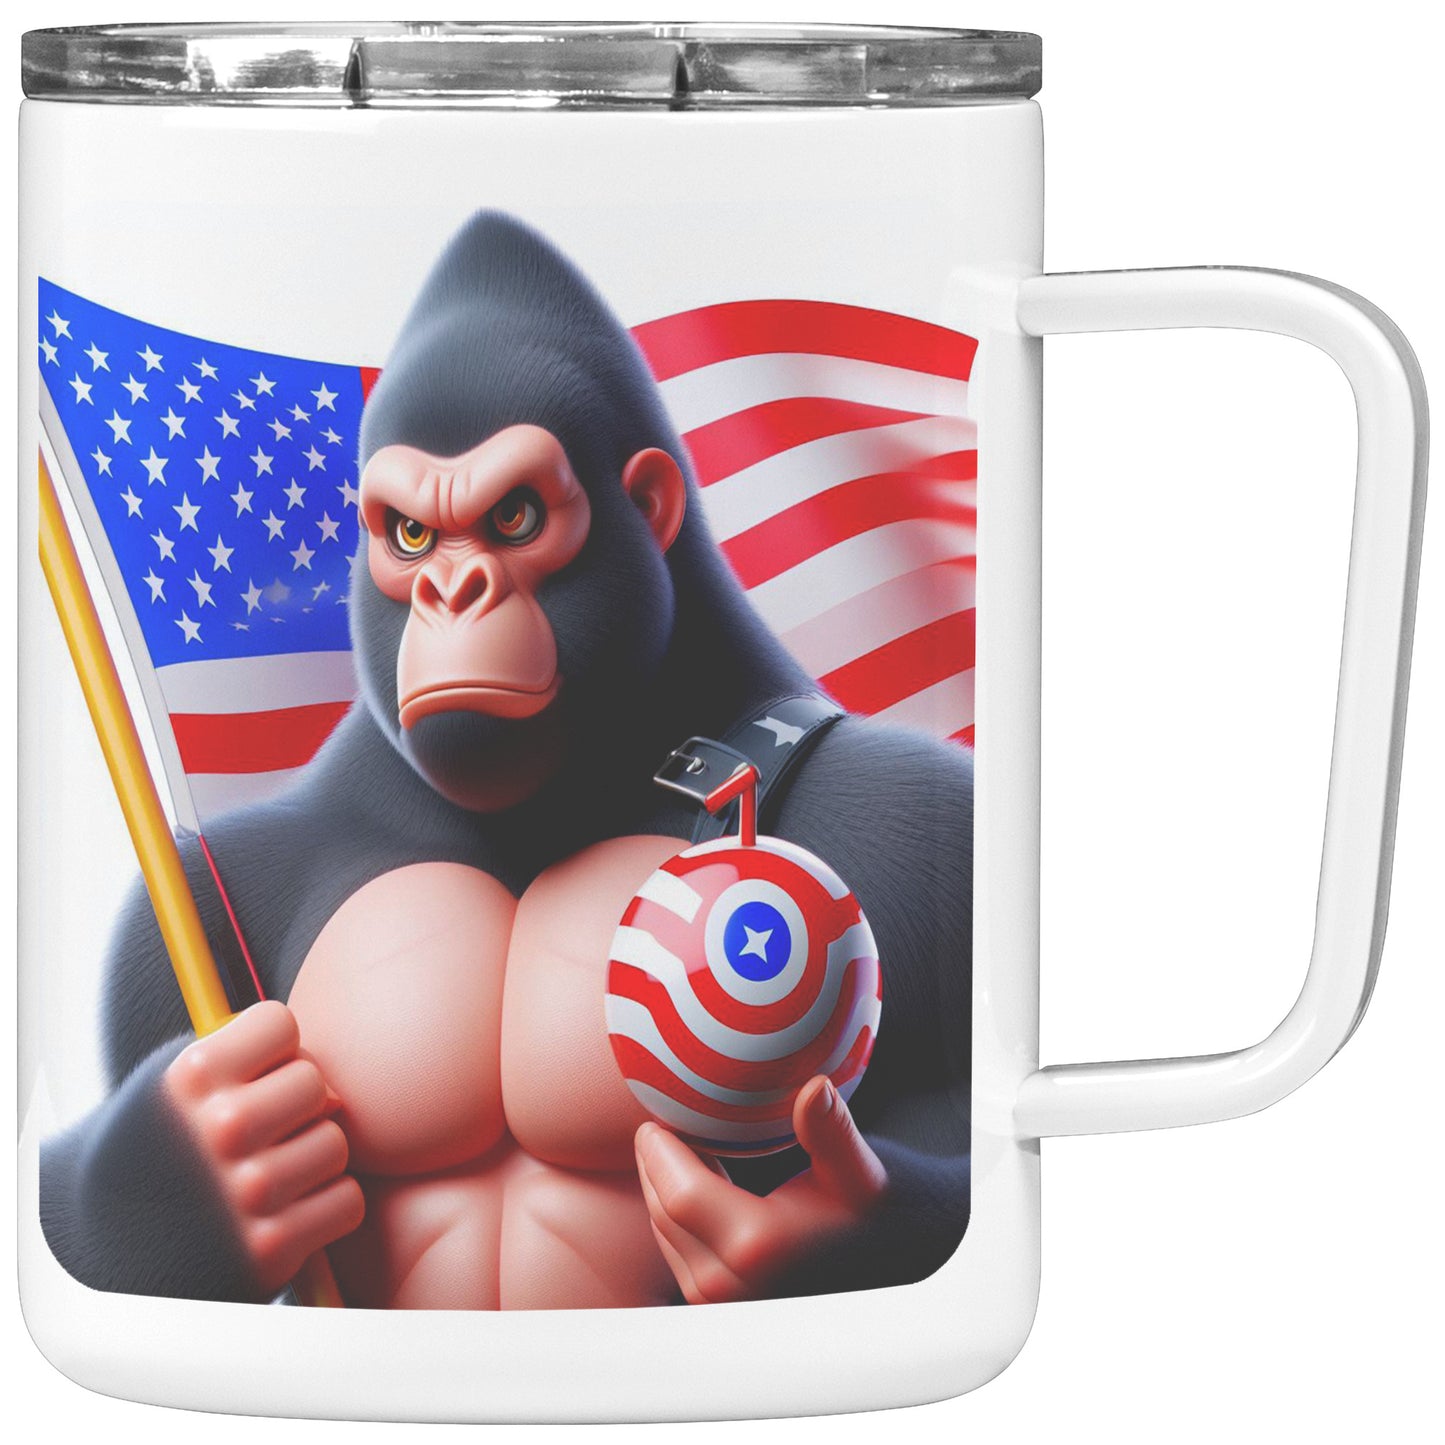 Grumpy Gorilla - Insulated Coffee Mug #10